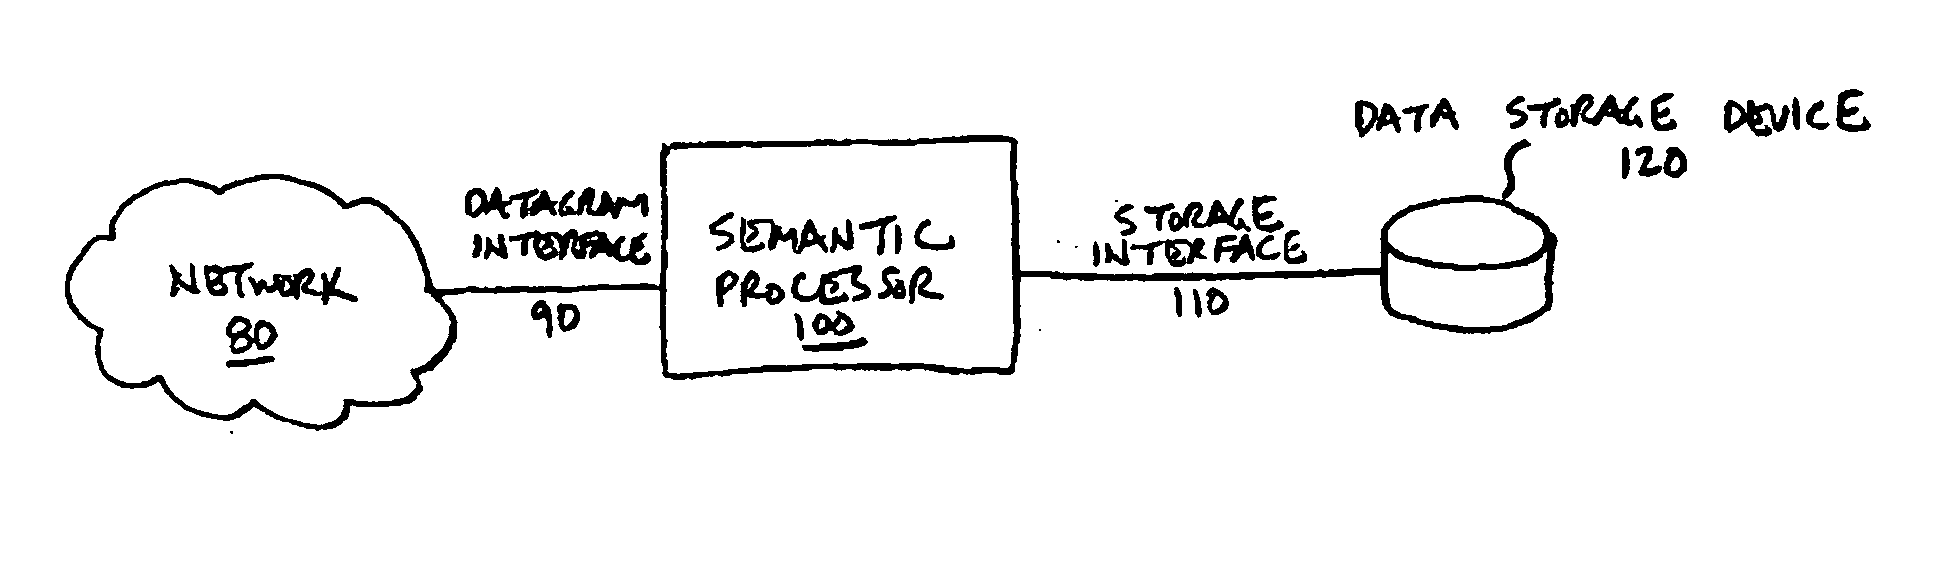 Semantic processor storage server architecture